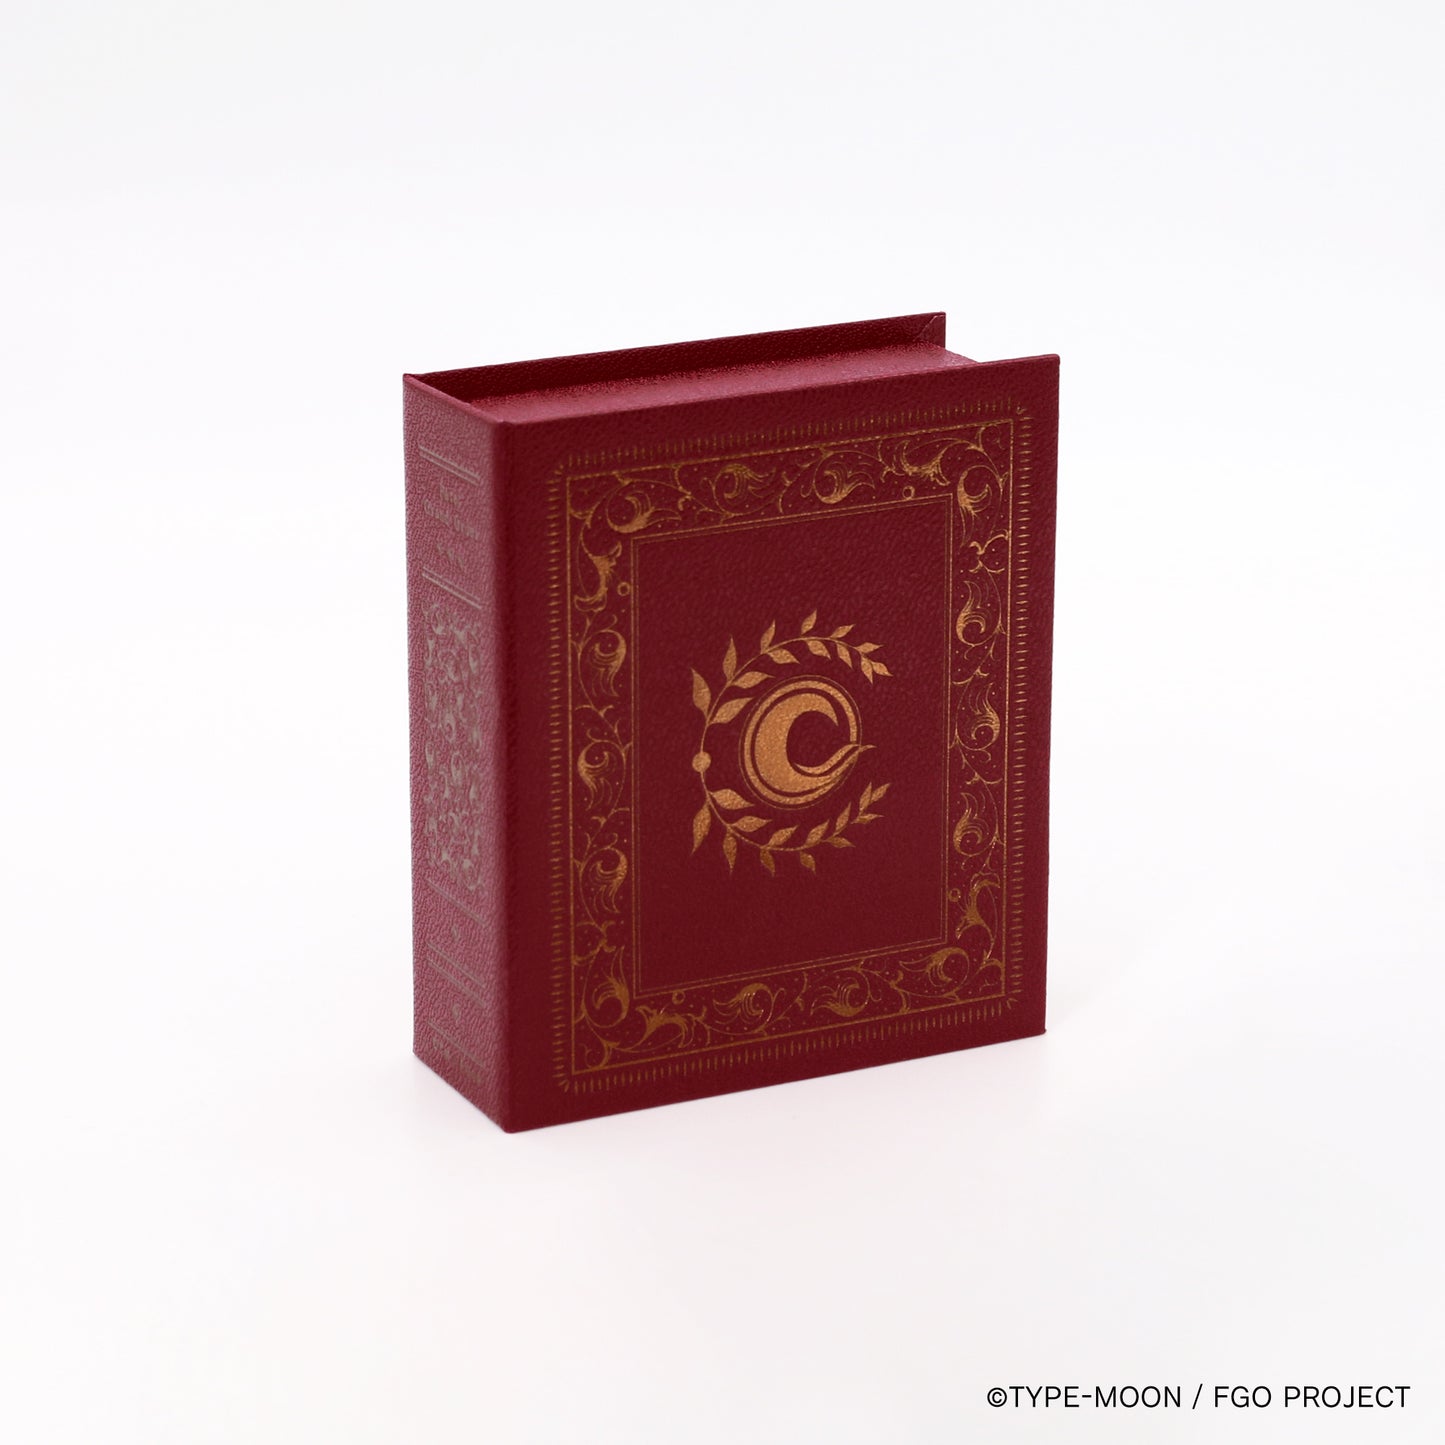 【Fate Grand Order】キリシュタリア・ヴォーダイム・丸印18mm&角印21mm